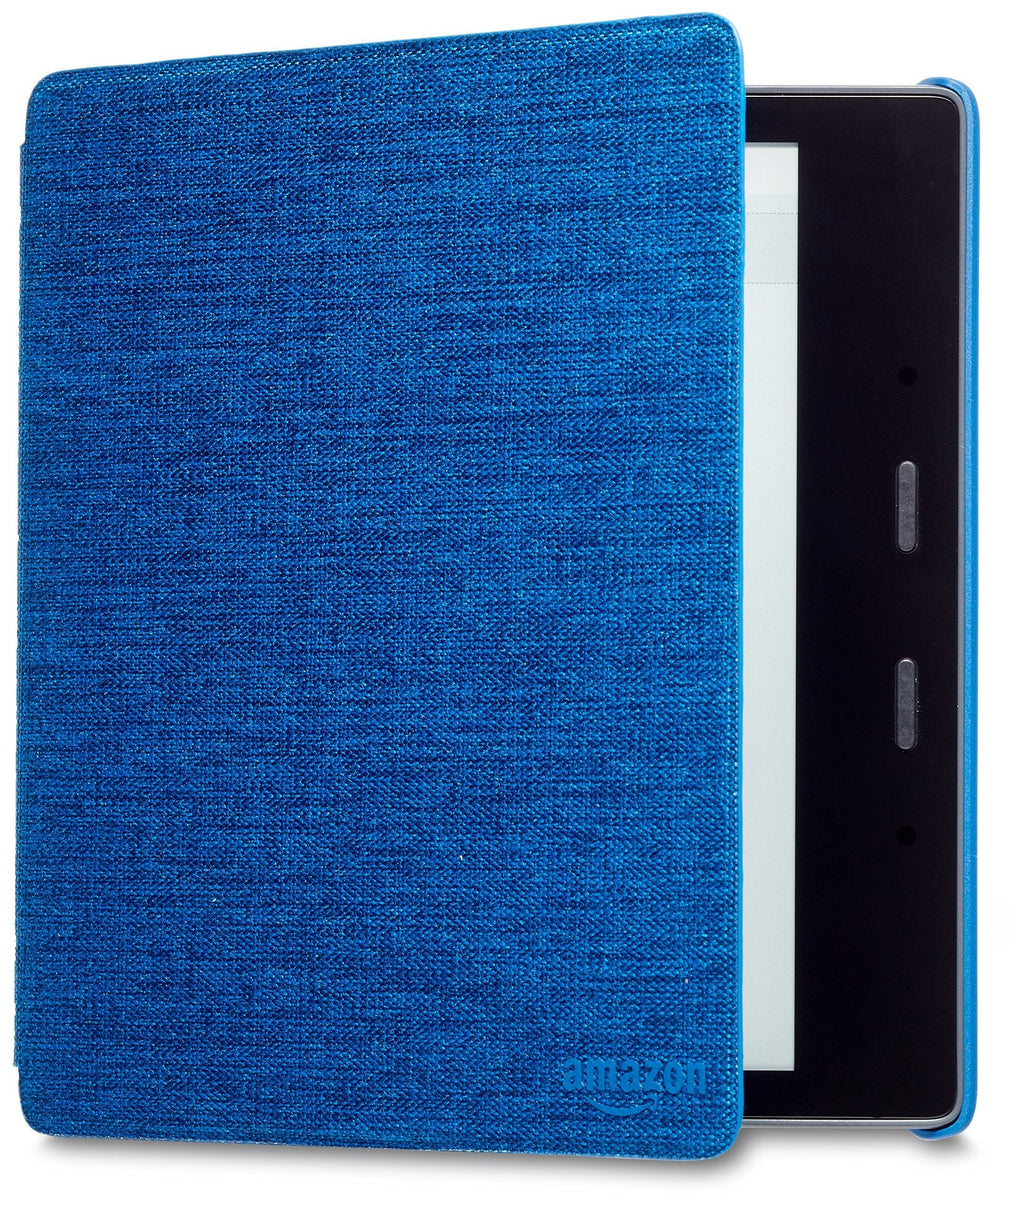  [AUSTRALIA] - Kindle Oasis Water-Safe Fabric Cover, Marine Blue